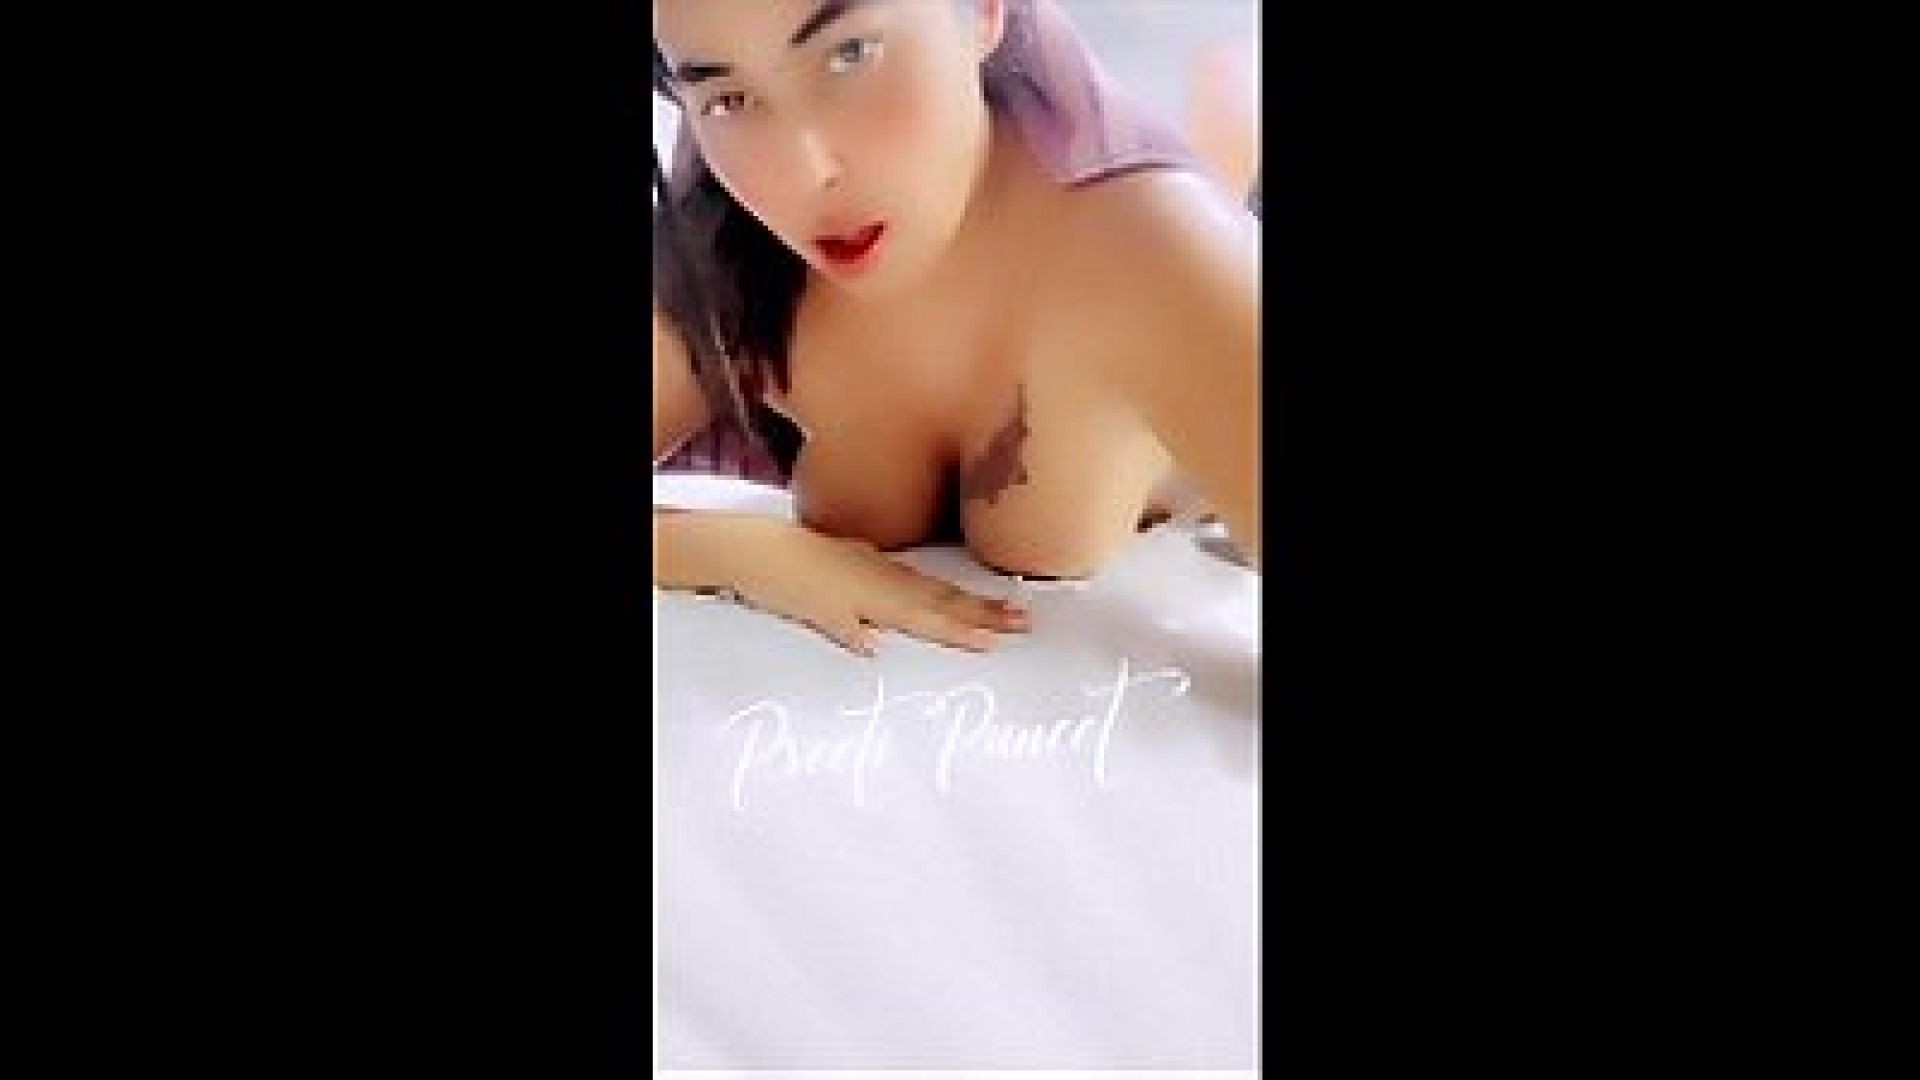 Horny Instagram model showing boobs